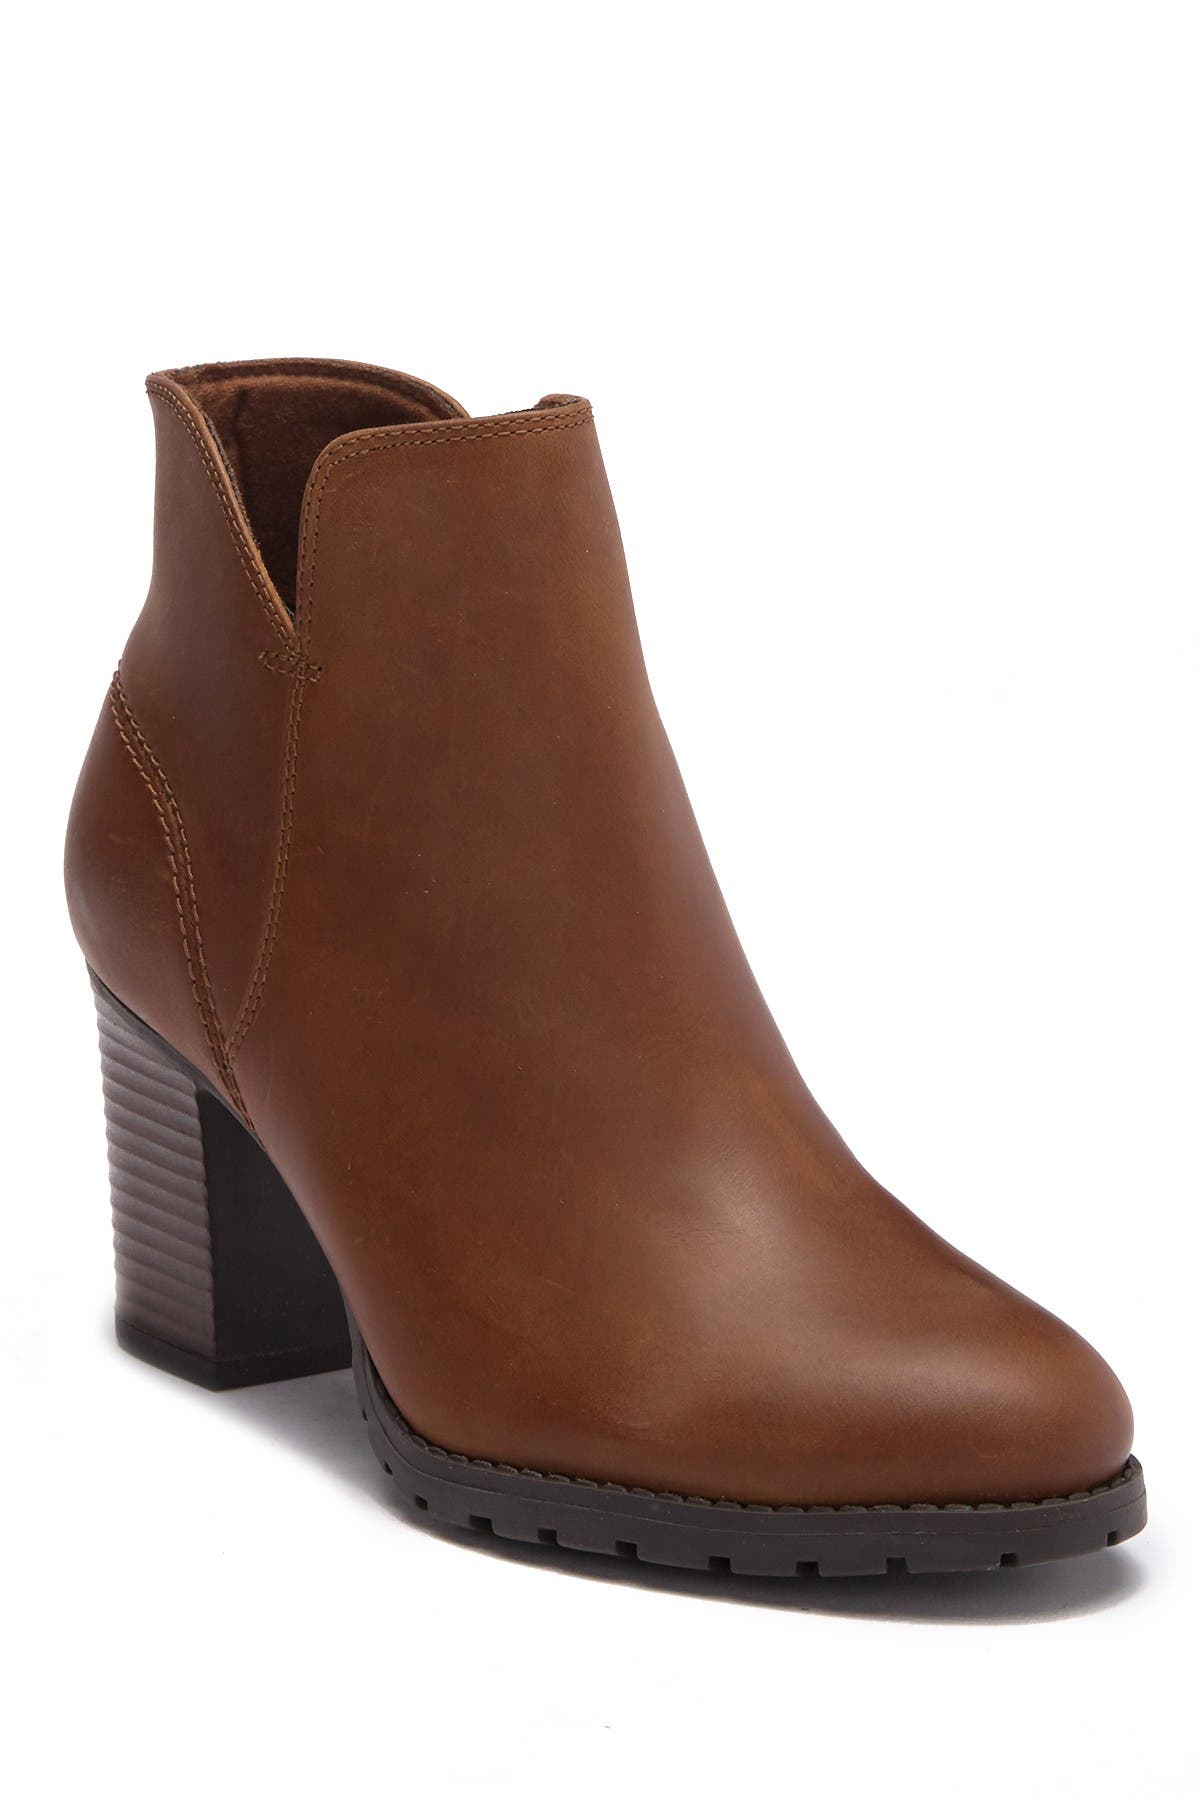 Clarks | Verona Trish Leather Boot 